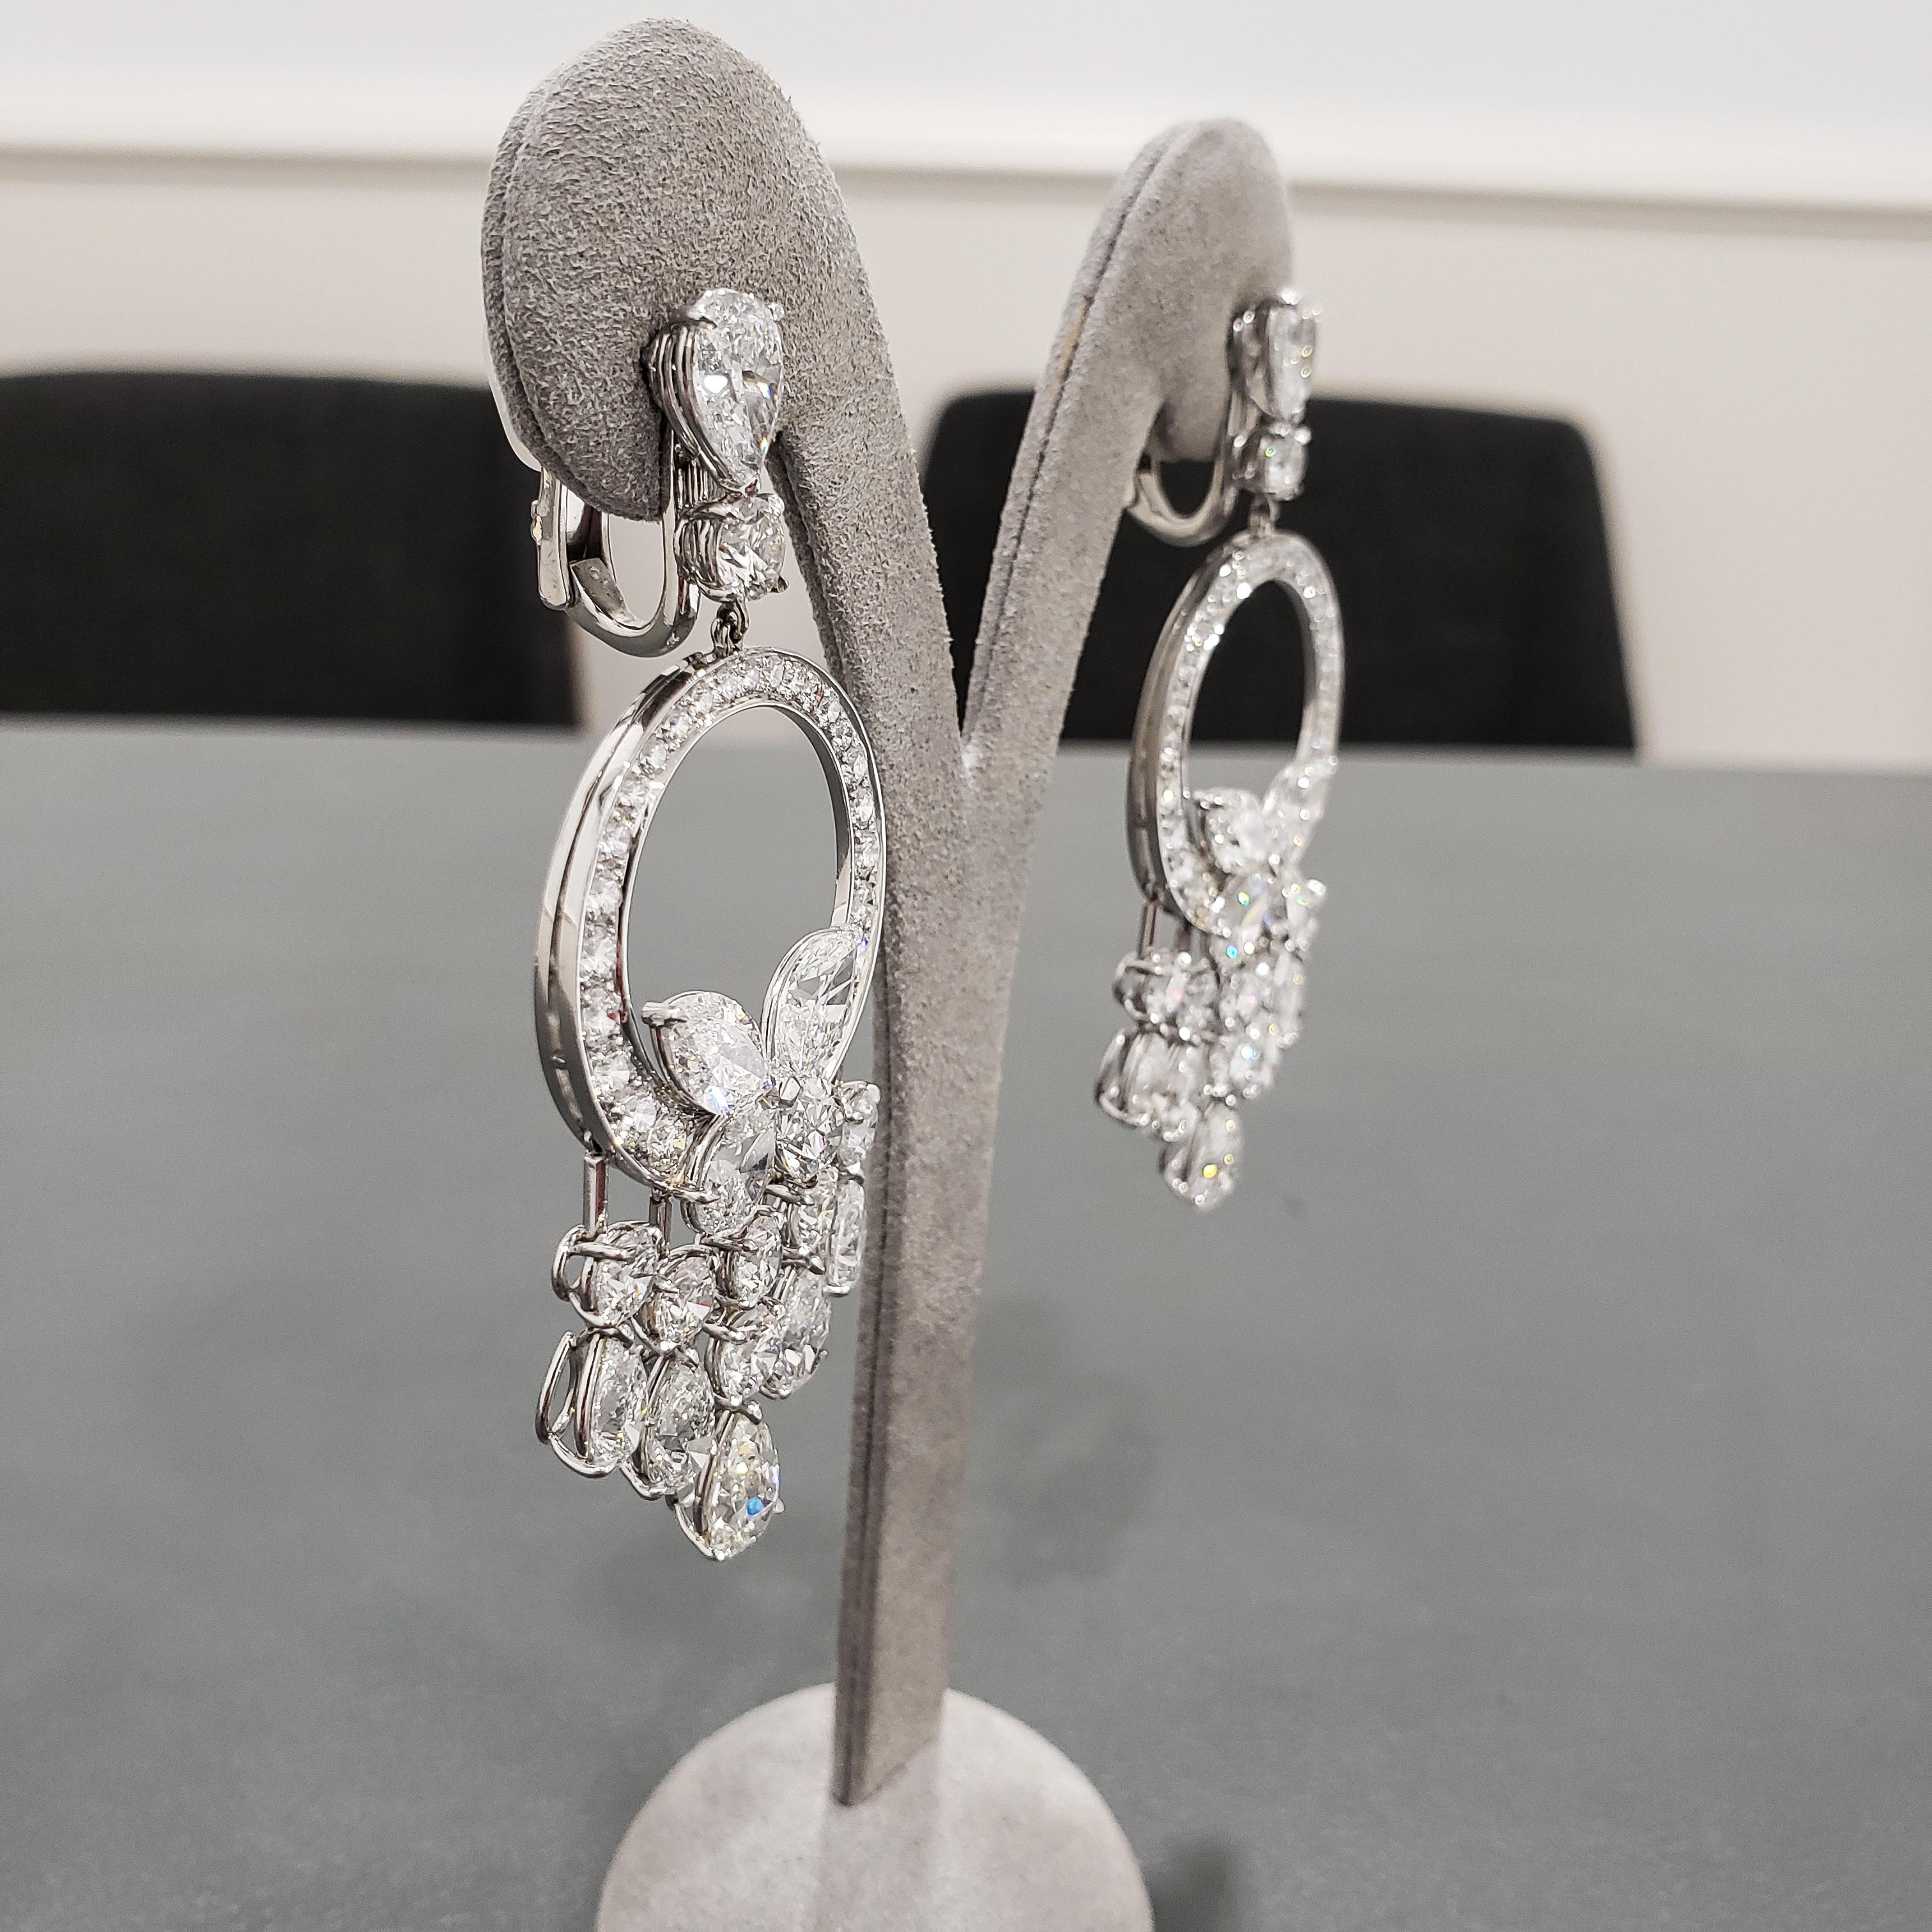 28.19 Carat Total Mixed Cut Diamond Open Work Chandelier Earrings in Platinum For Sale 2